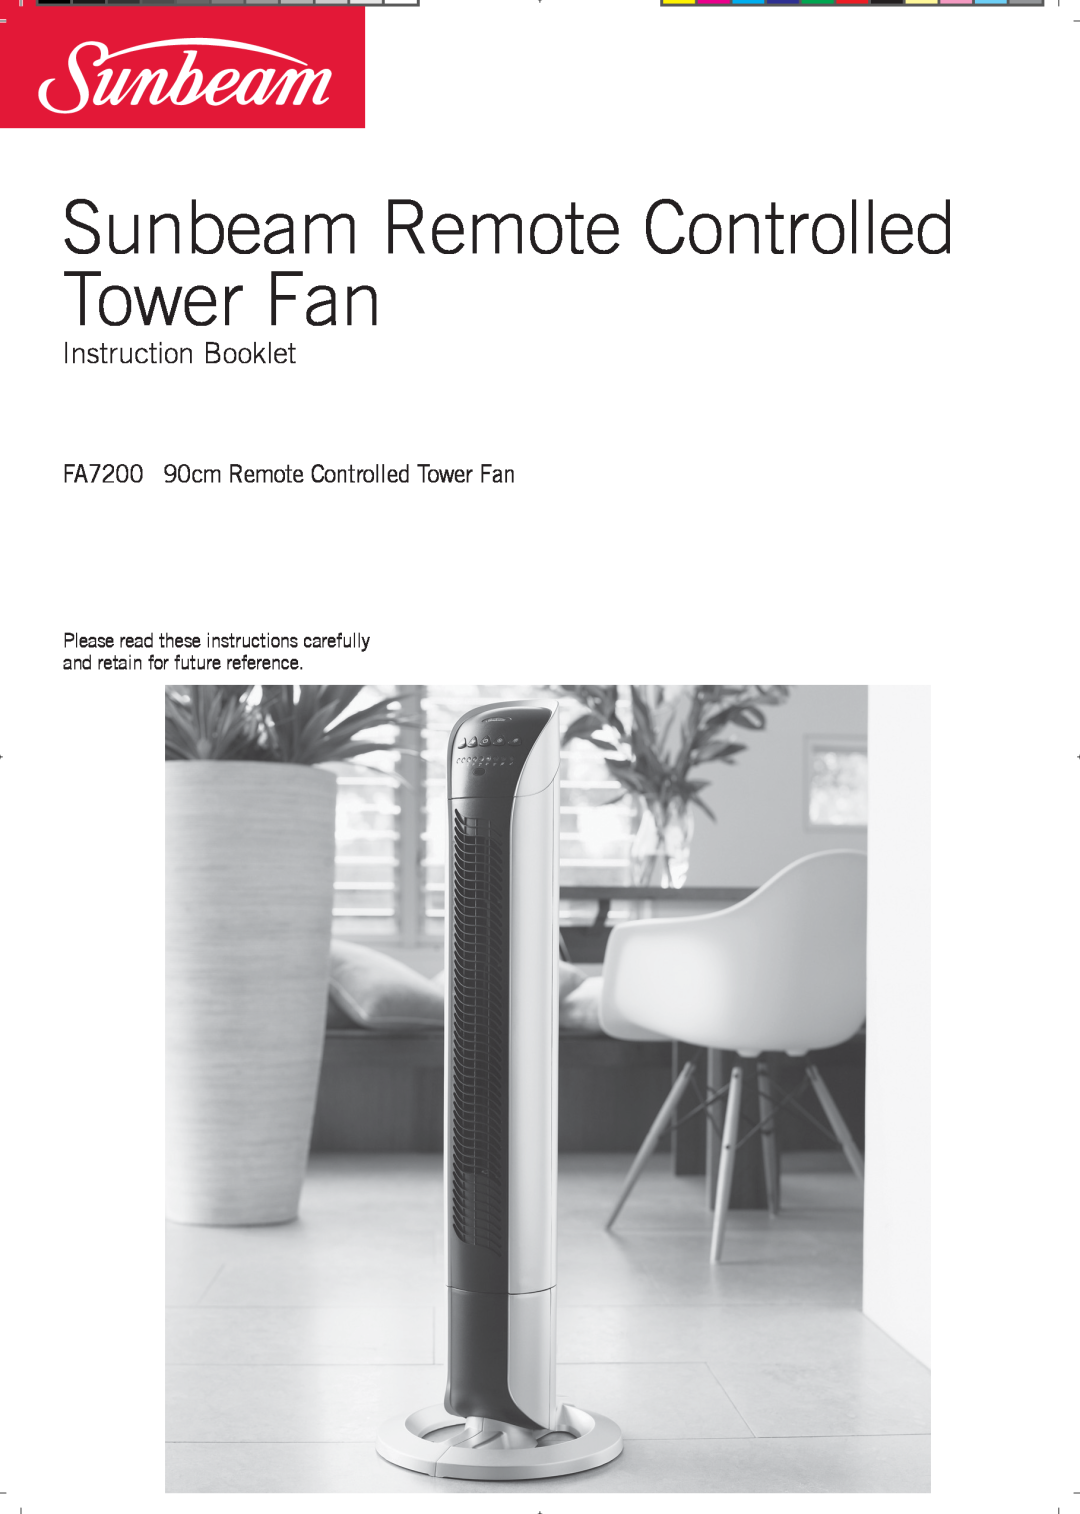 Sunbeam manual Instruction Booklet, FA7200 90cm Remote Controlled Tower Fan, Sunbeam Remote Controlled Tower Fan 